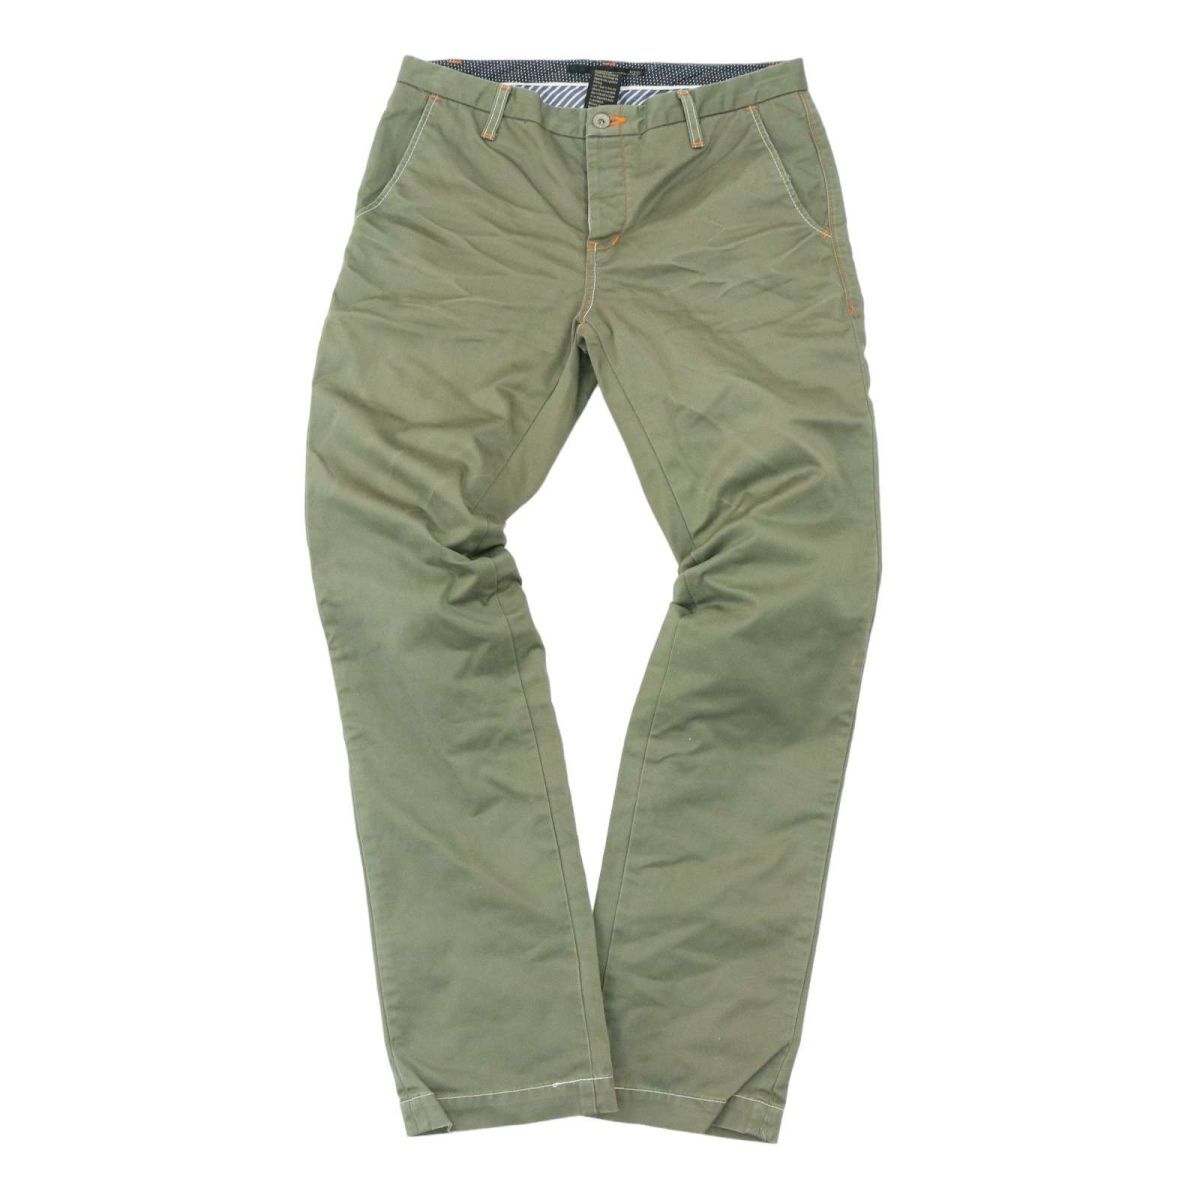 D/him. double standard closing through year cotton tsu il * slim pants Sz.46 men's made in Japan A4B01529_3#R